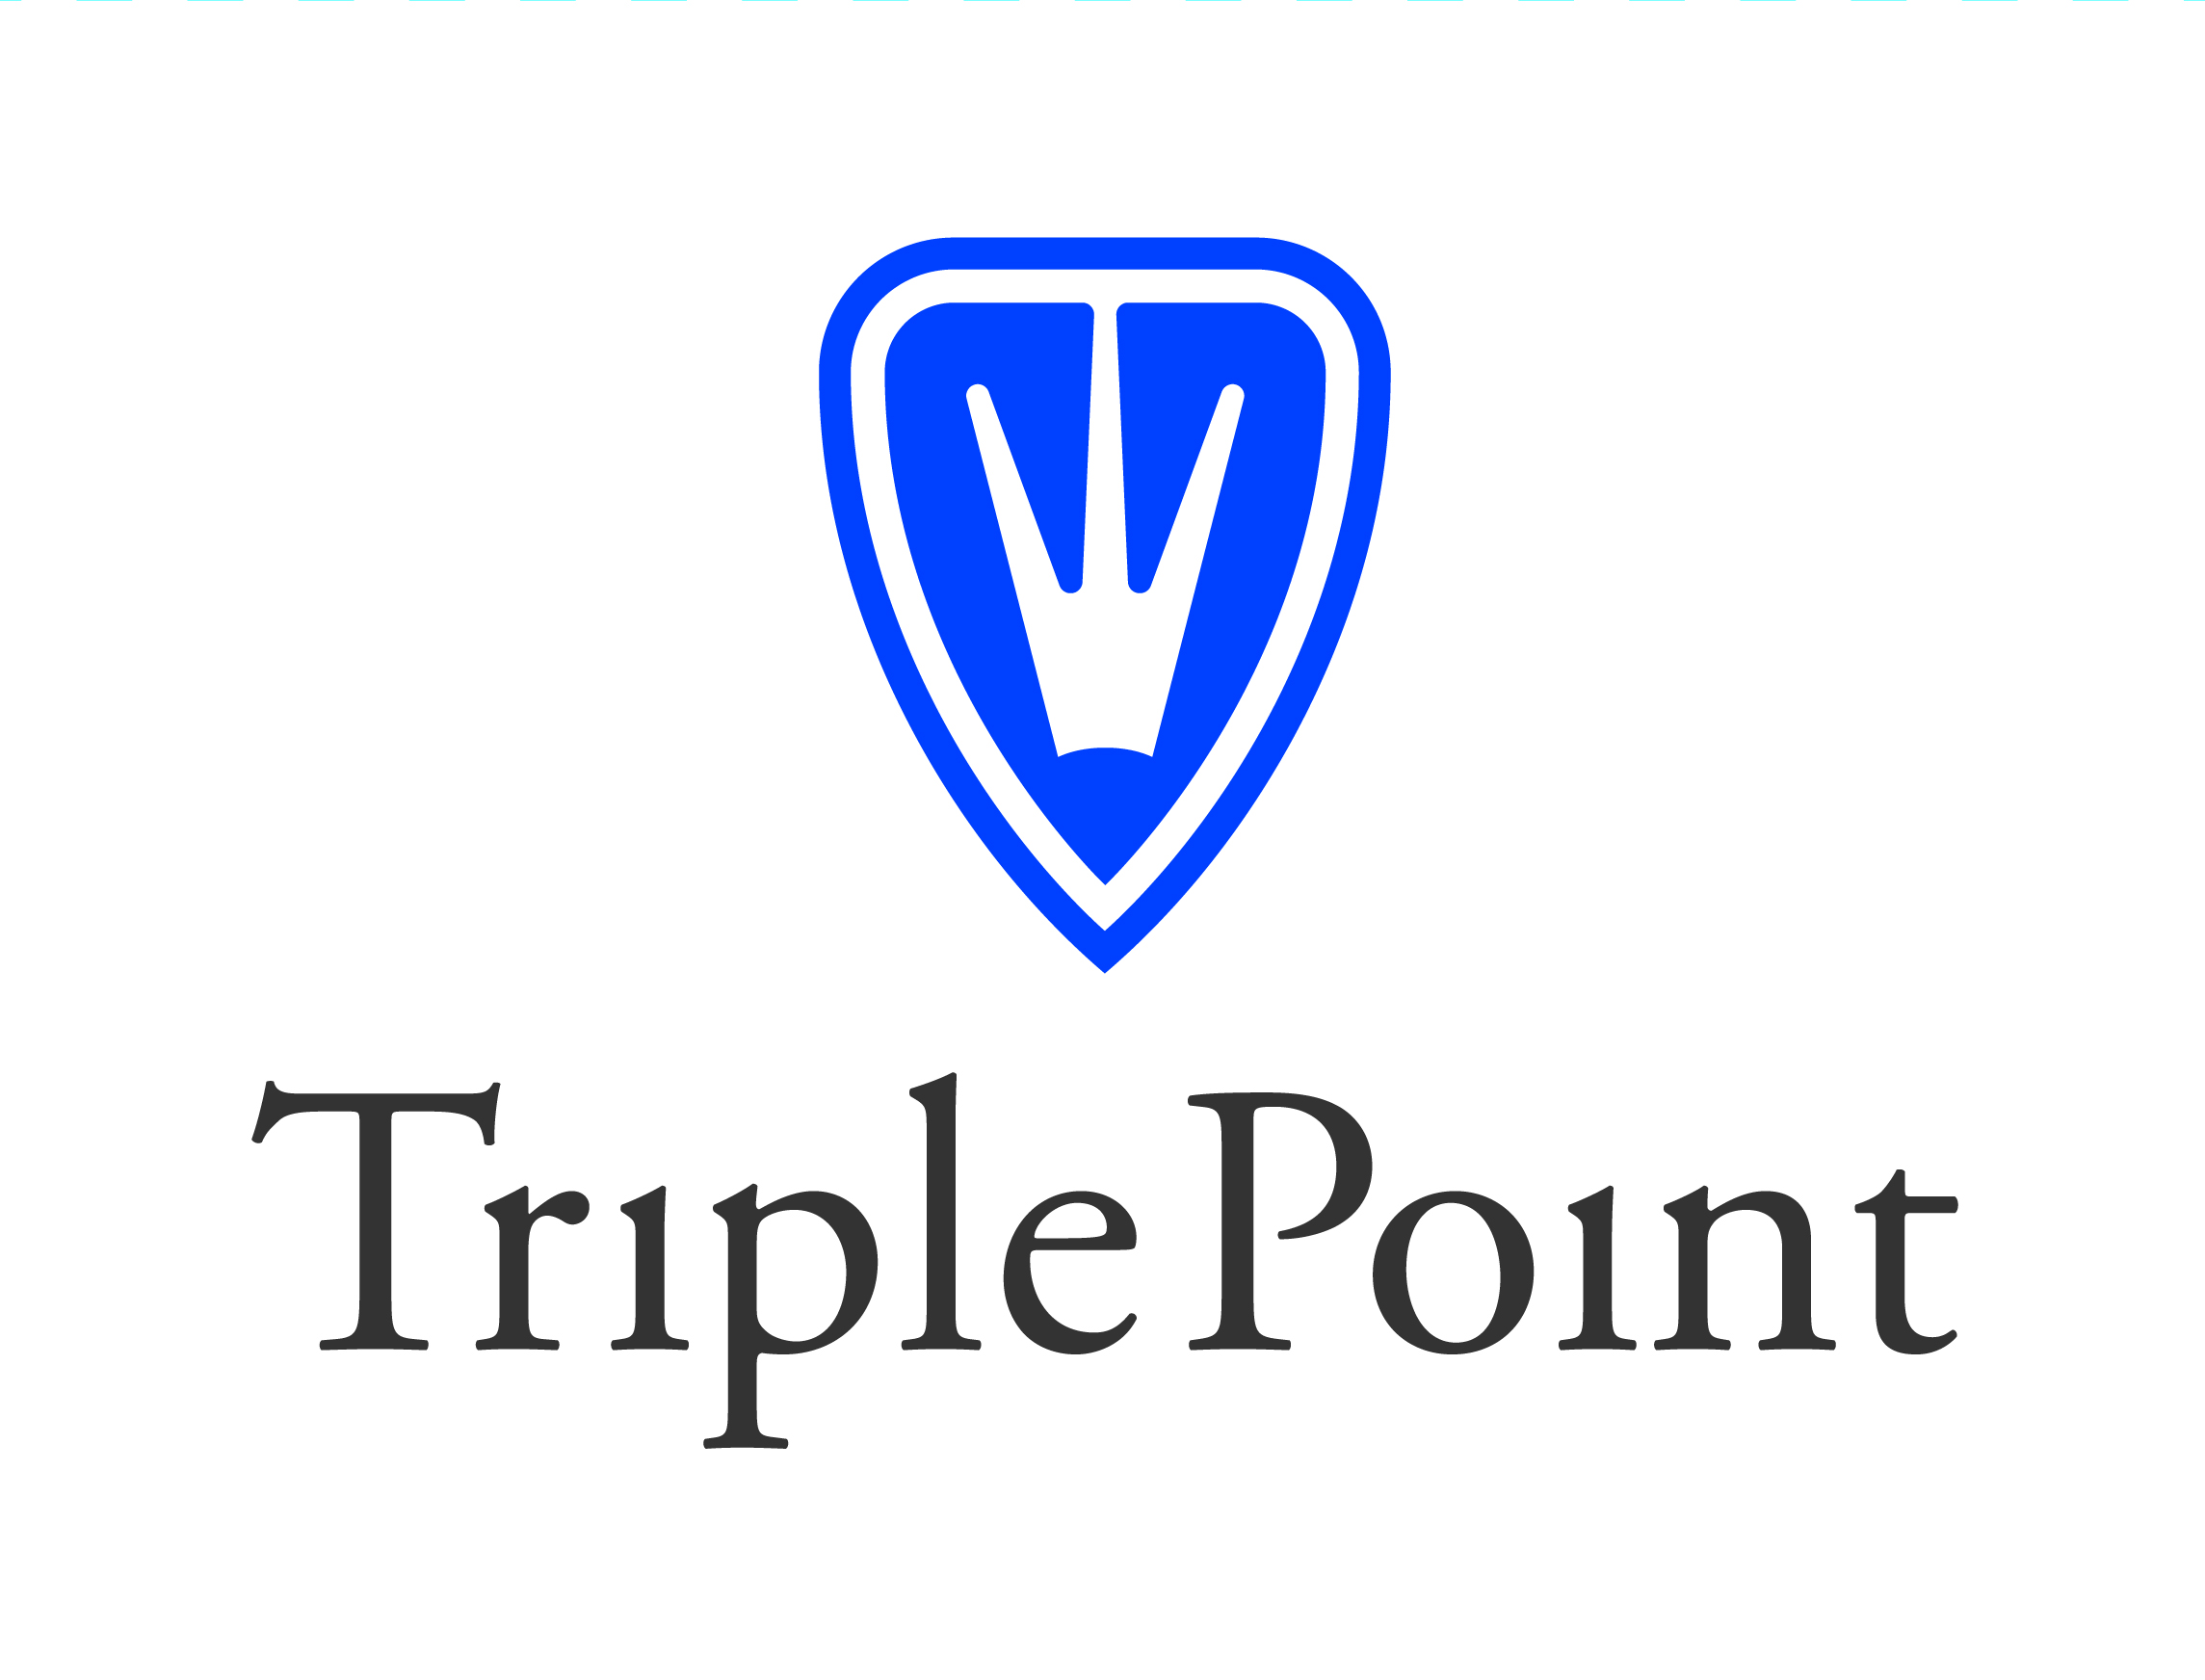 Triple Point logo